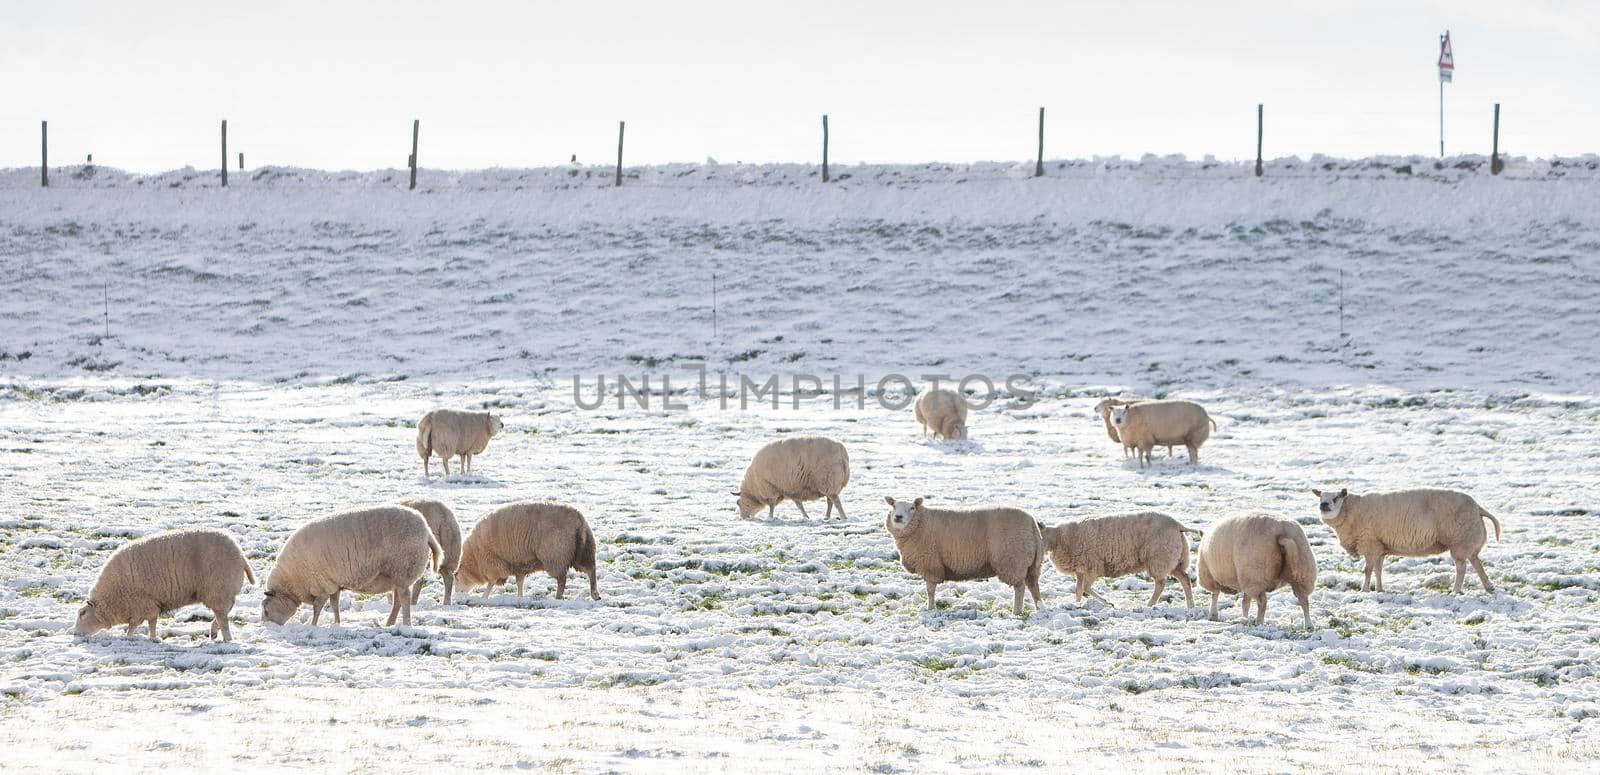 sheep graze in snow covered meadow near river dike in holland by ahavelaar